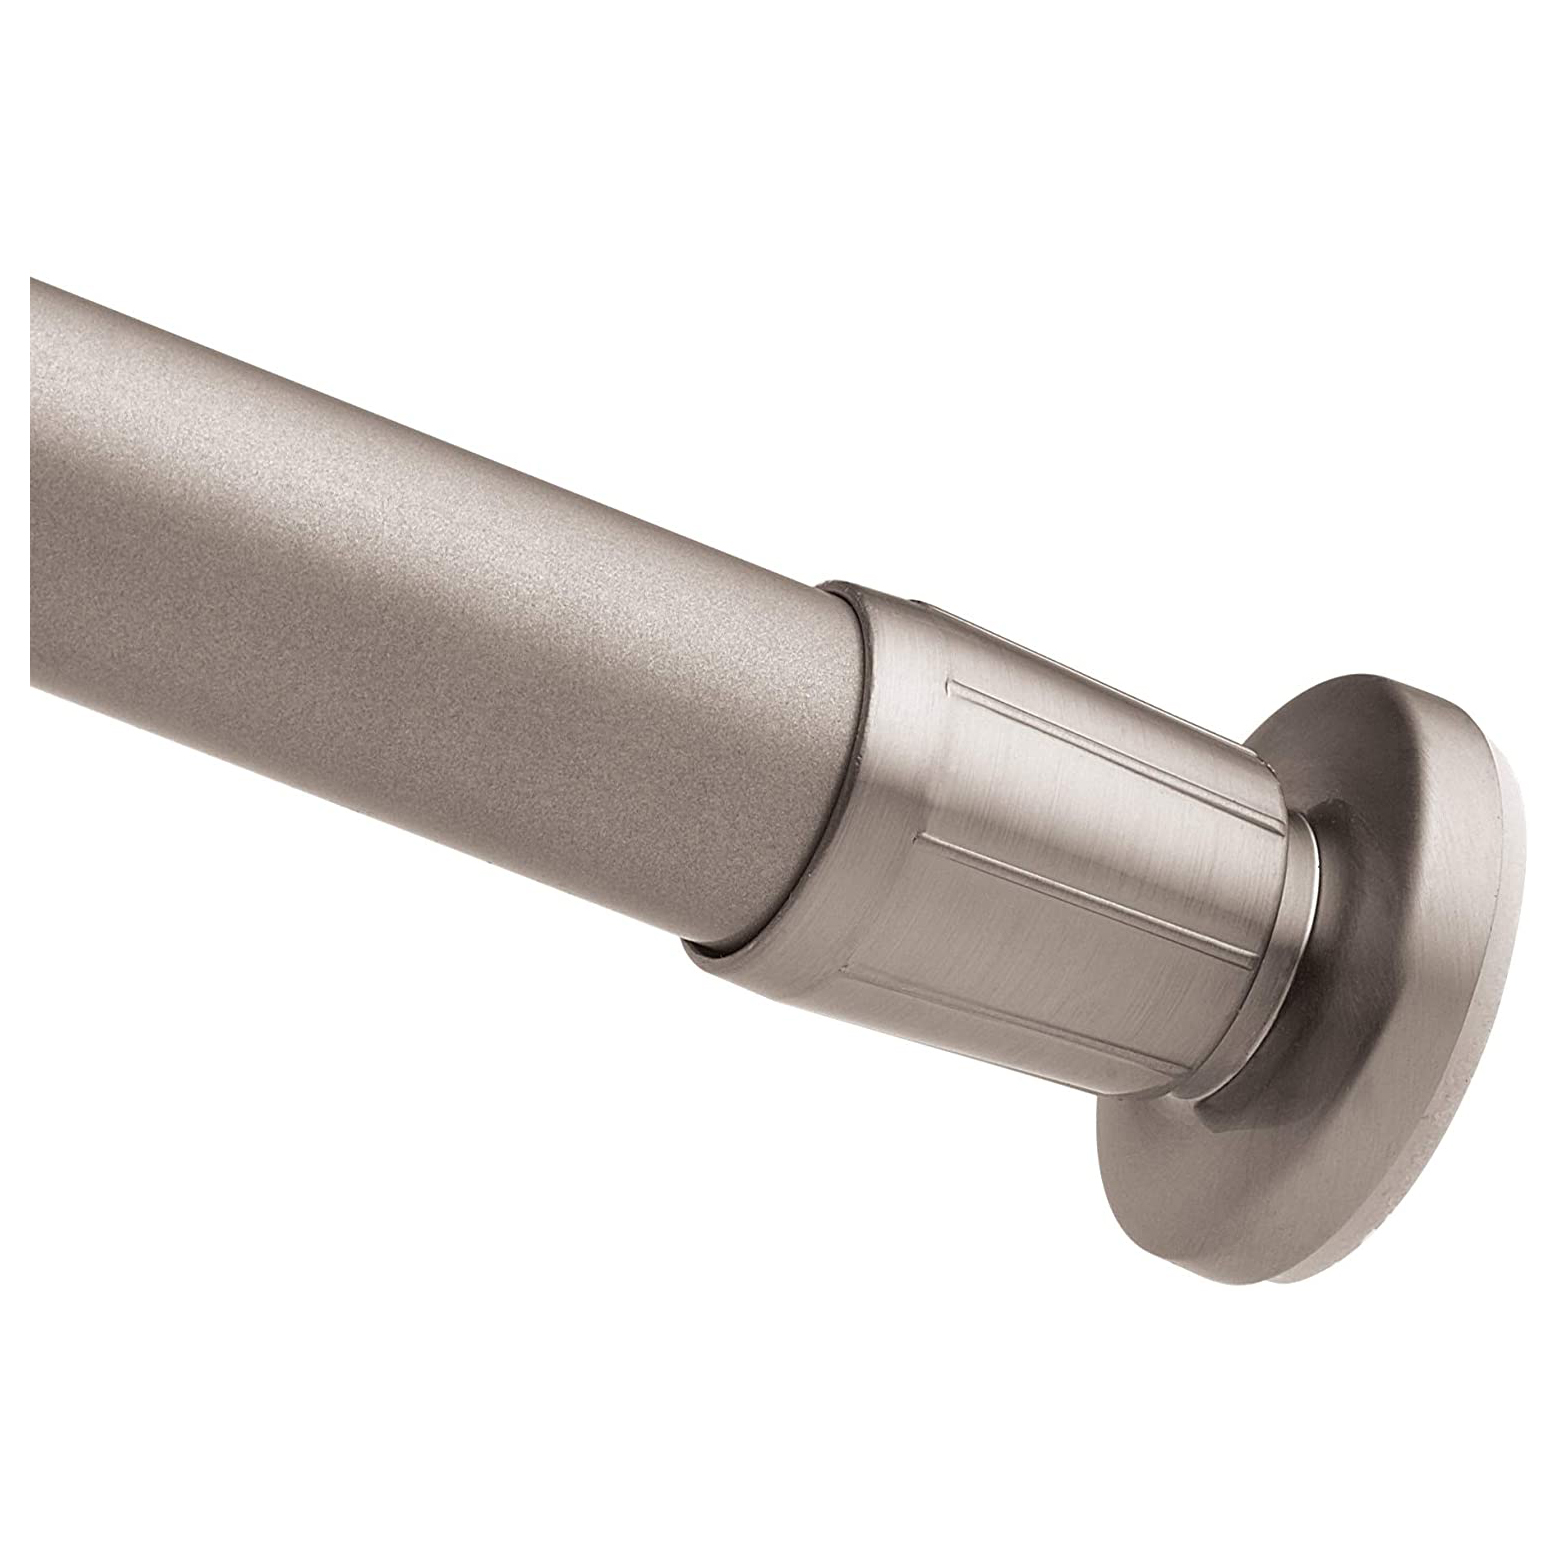 Donner Commercial Shower Rod In Brushed Nickel